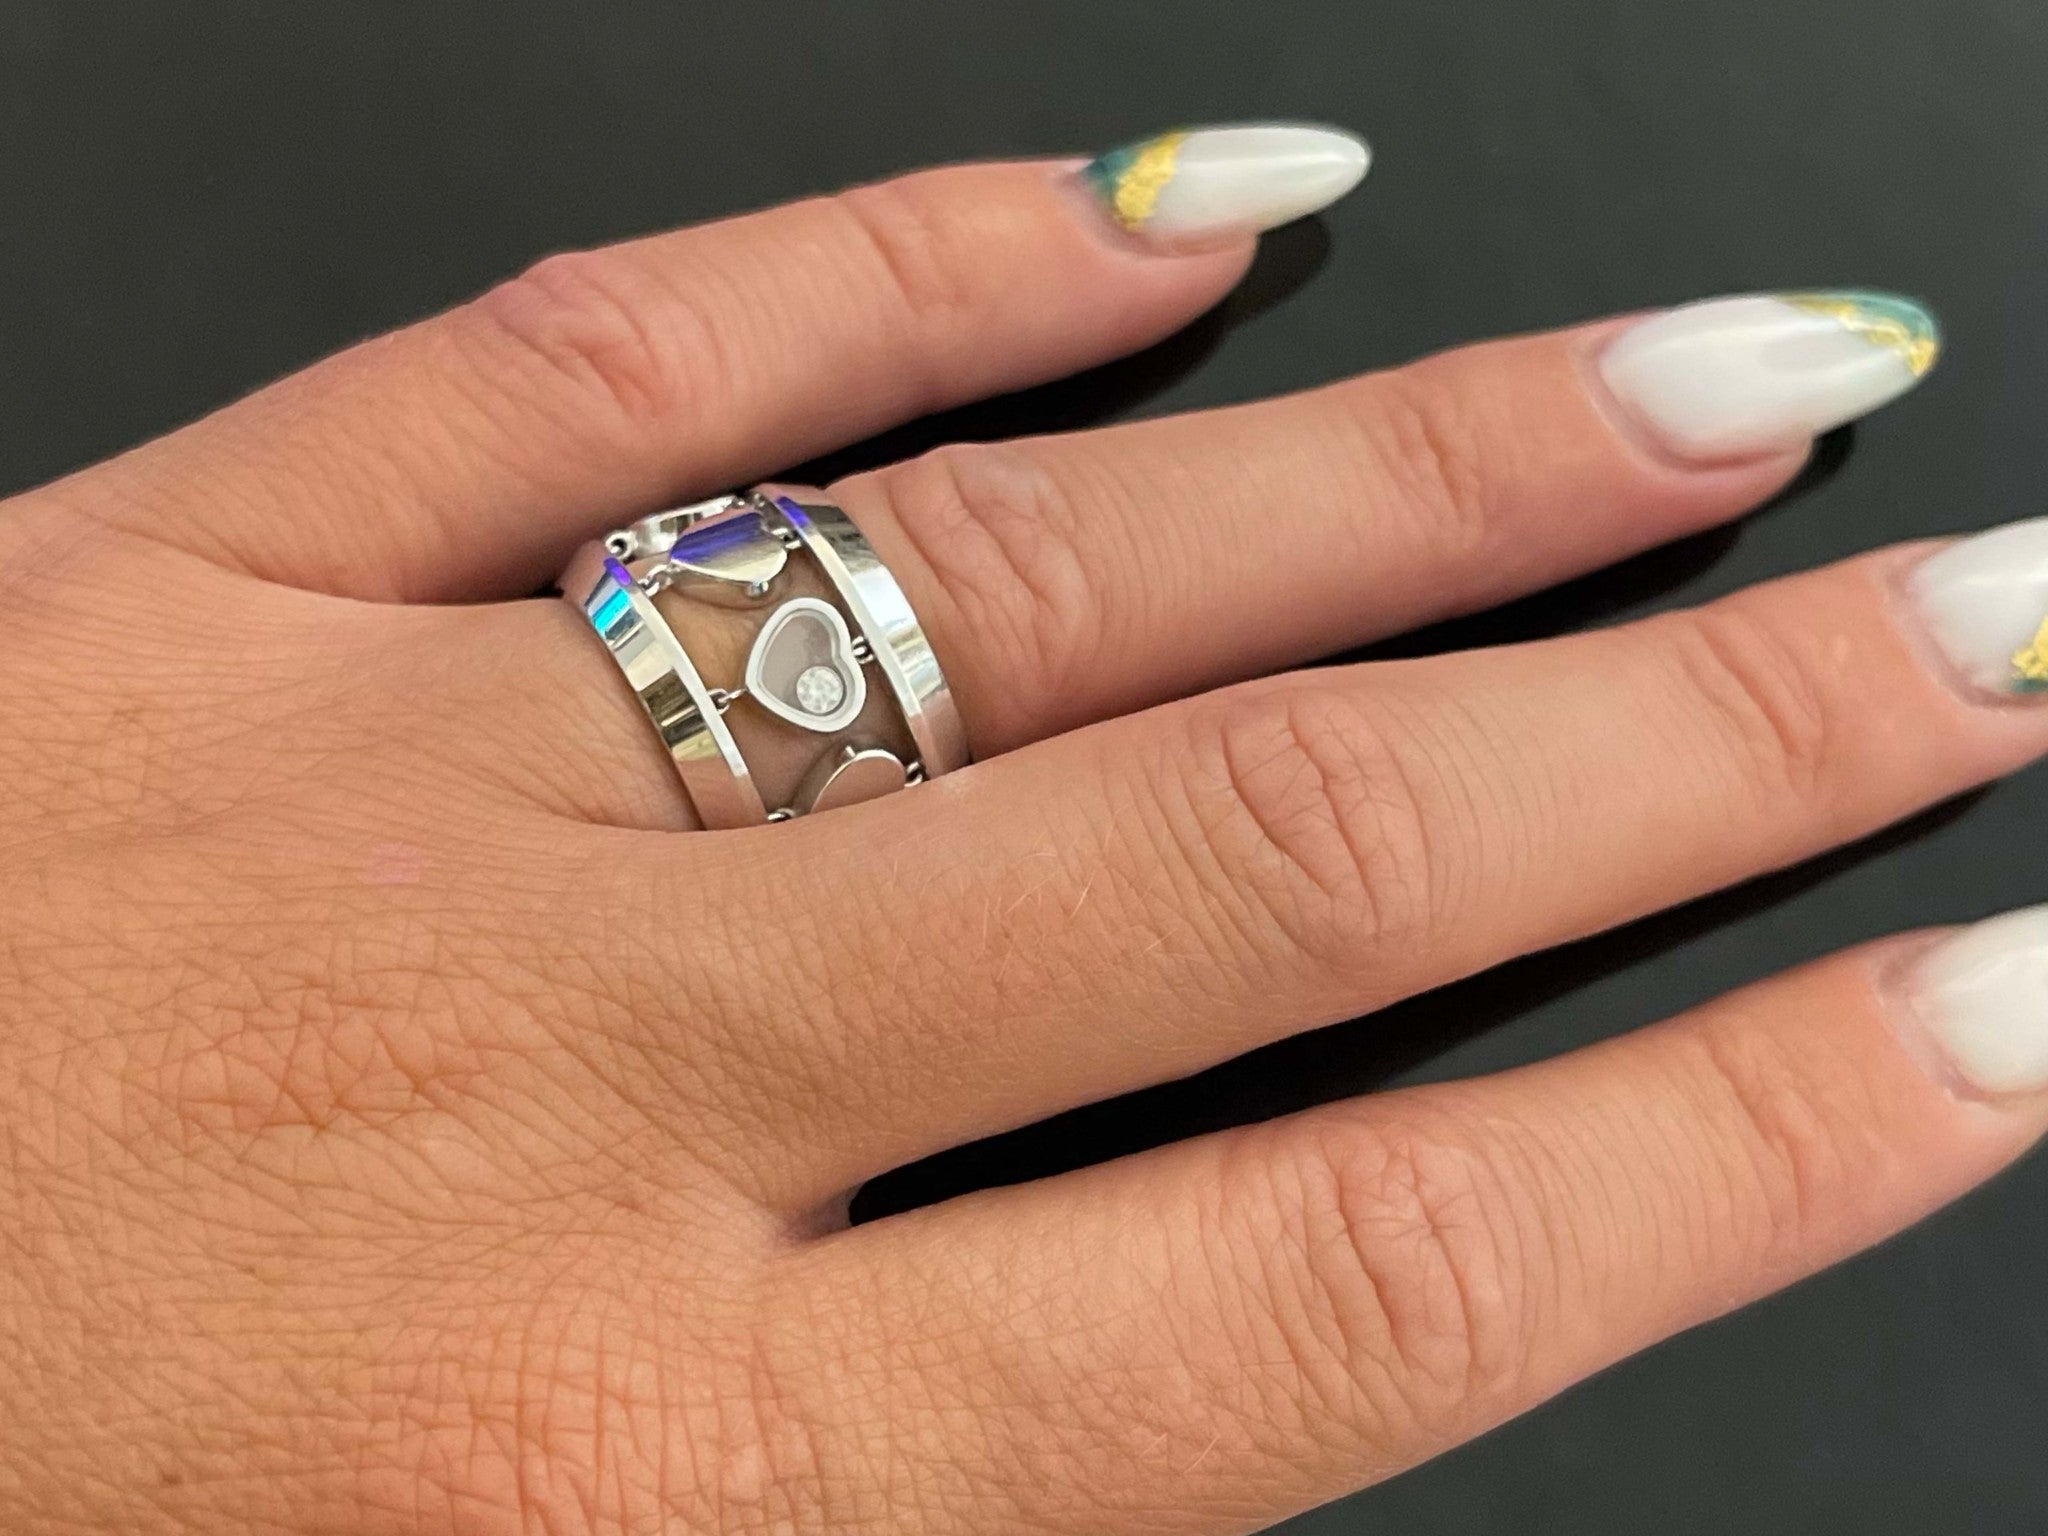 Chopard Happy Diamond Heart Ring in 18k White Gold